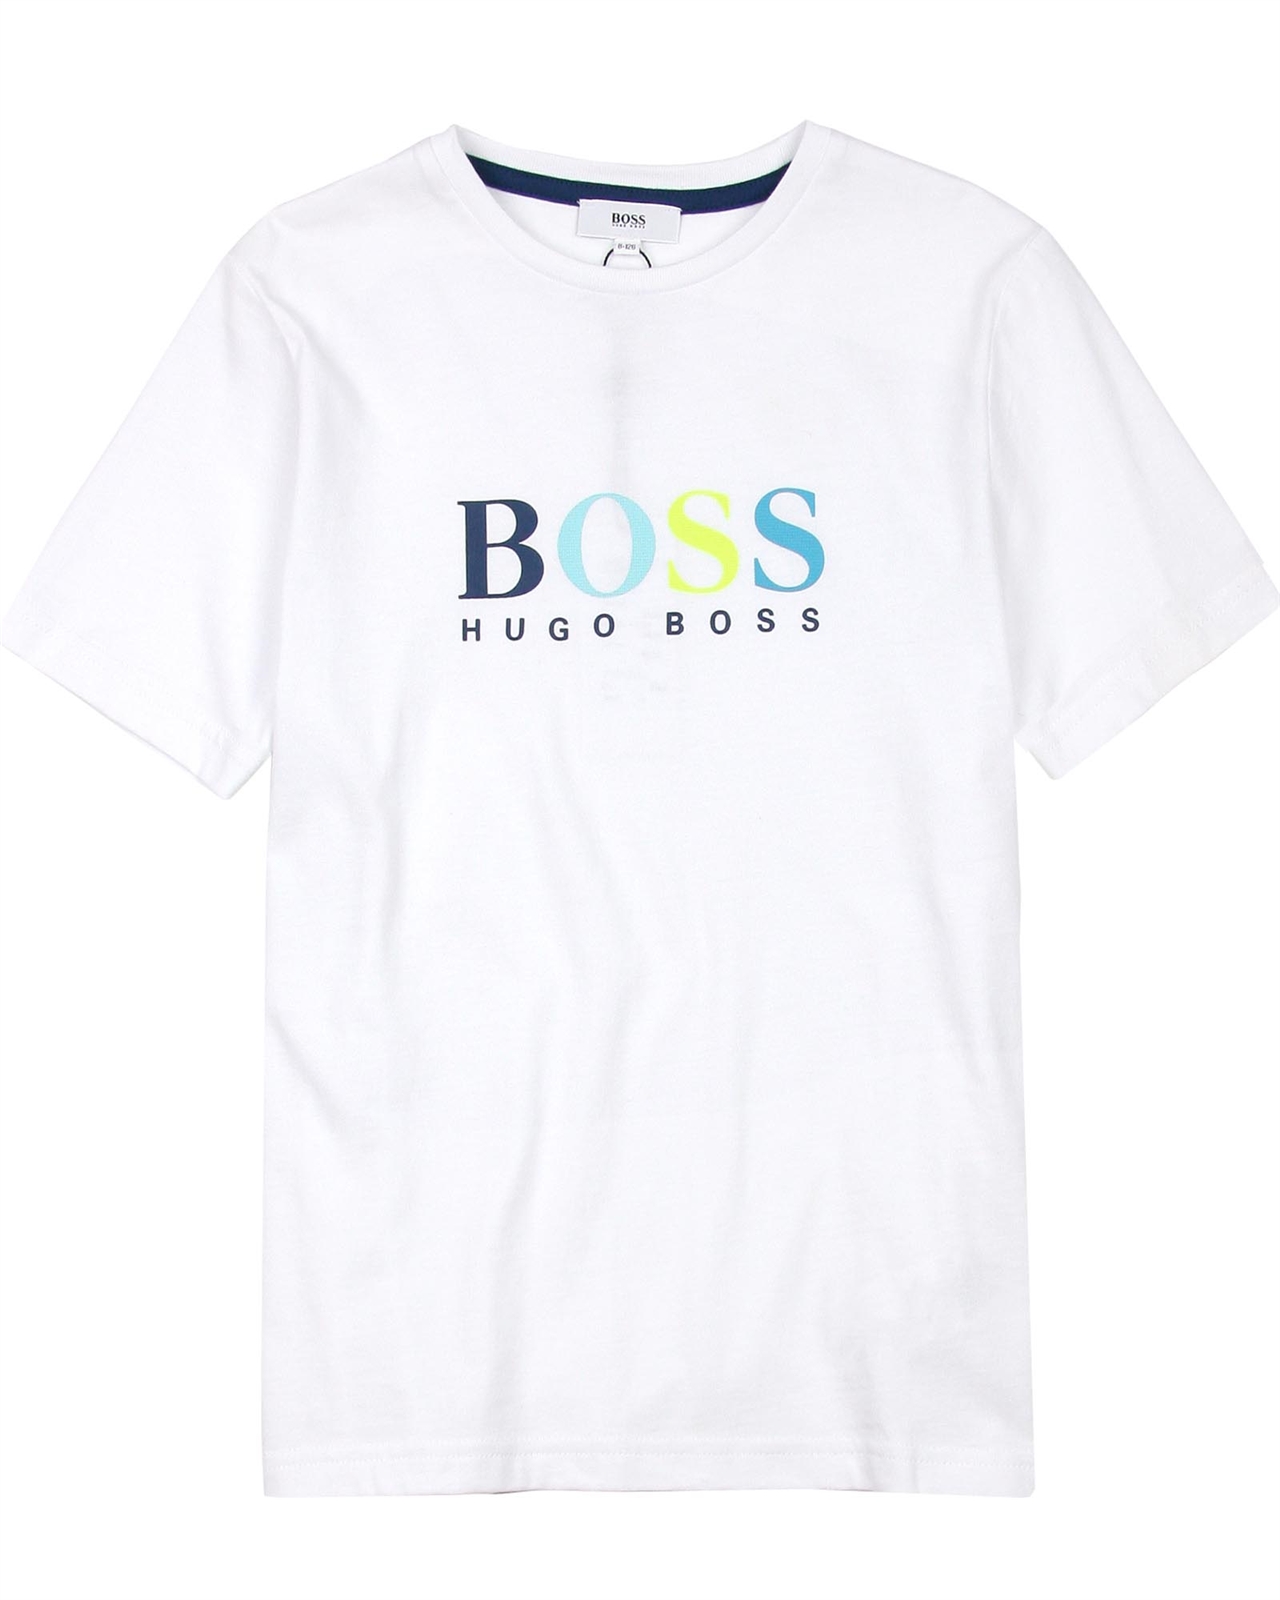 boss shirt sizes